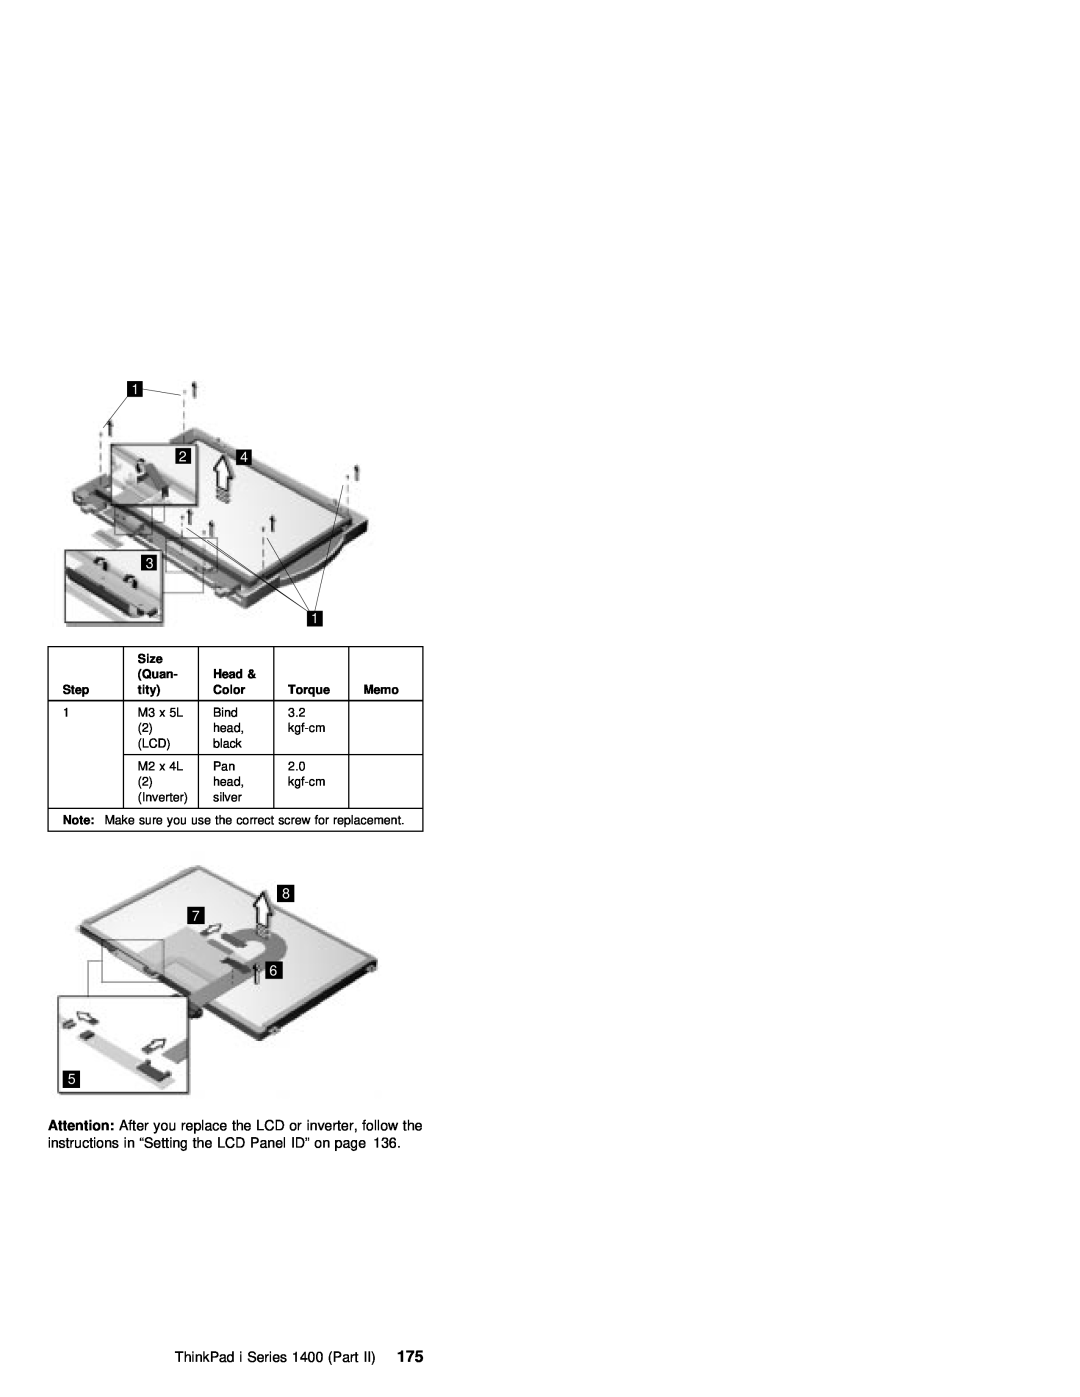 IBM 1400 (2611) manual ThinkPad i Series 1400 Part175, Size, Quan, Head, Step, tity, Color, Torque, Memo 